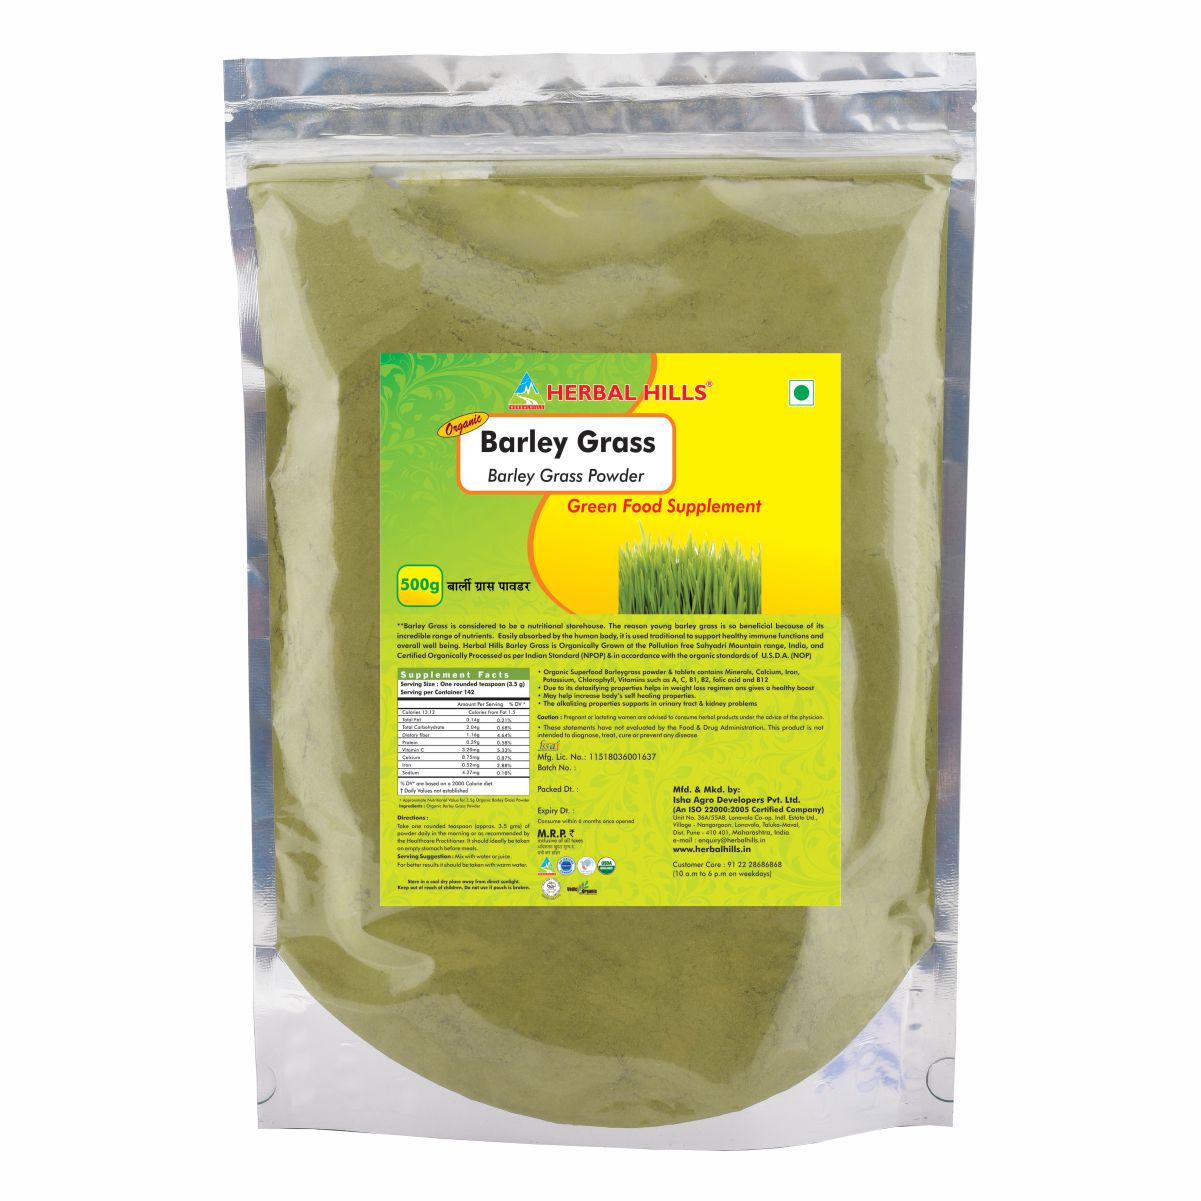 Buy Herbal Hills Barley Grass Powder at Best Price Online